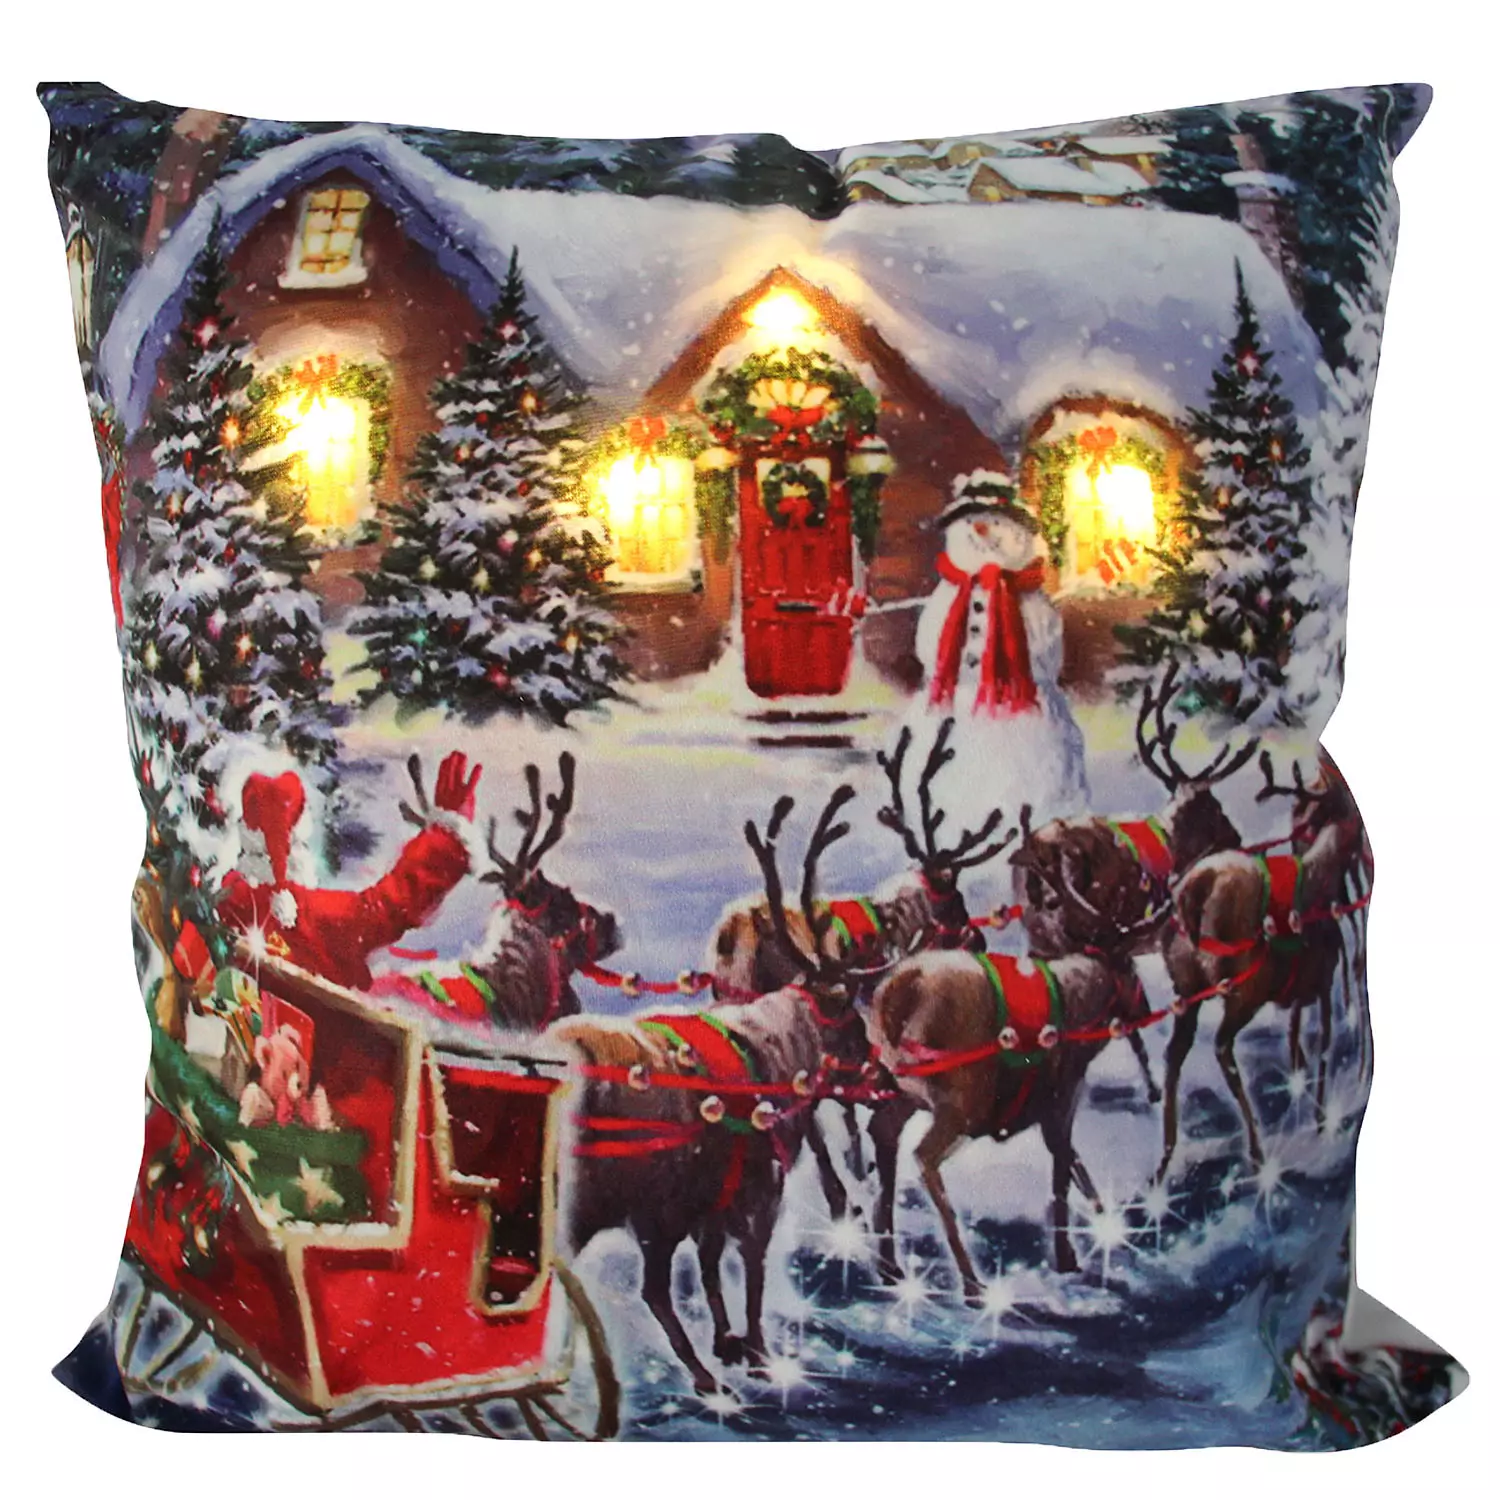 Light Up LED, photoreal printed Christmas cushion, Santa's sleigh, 17"x17"